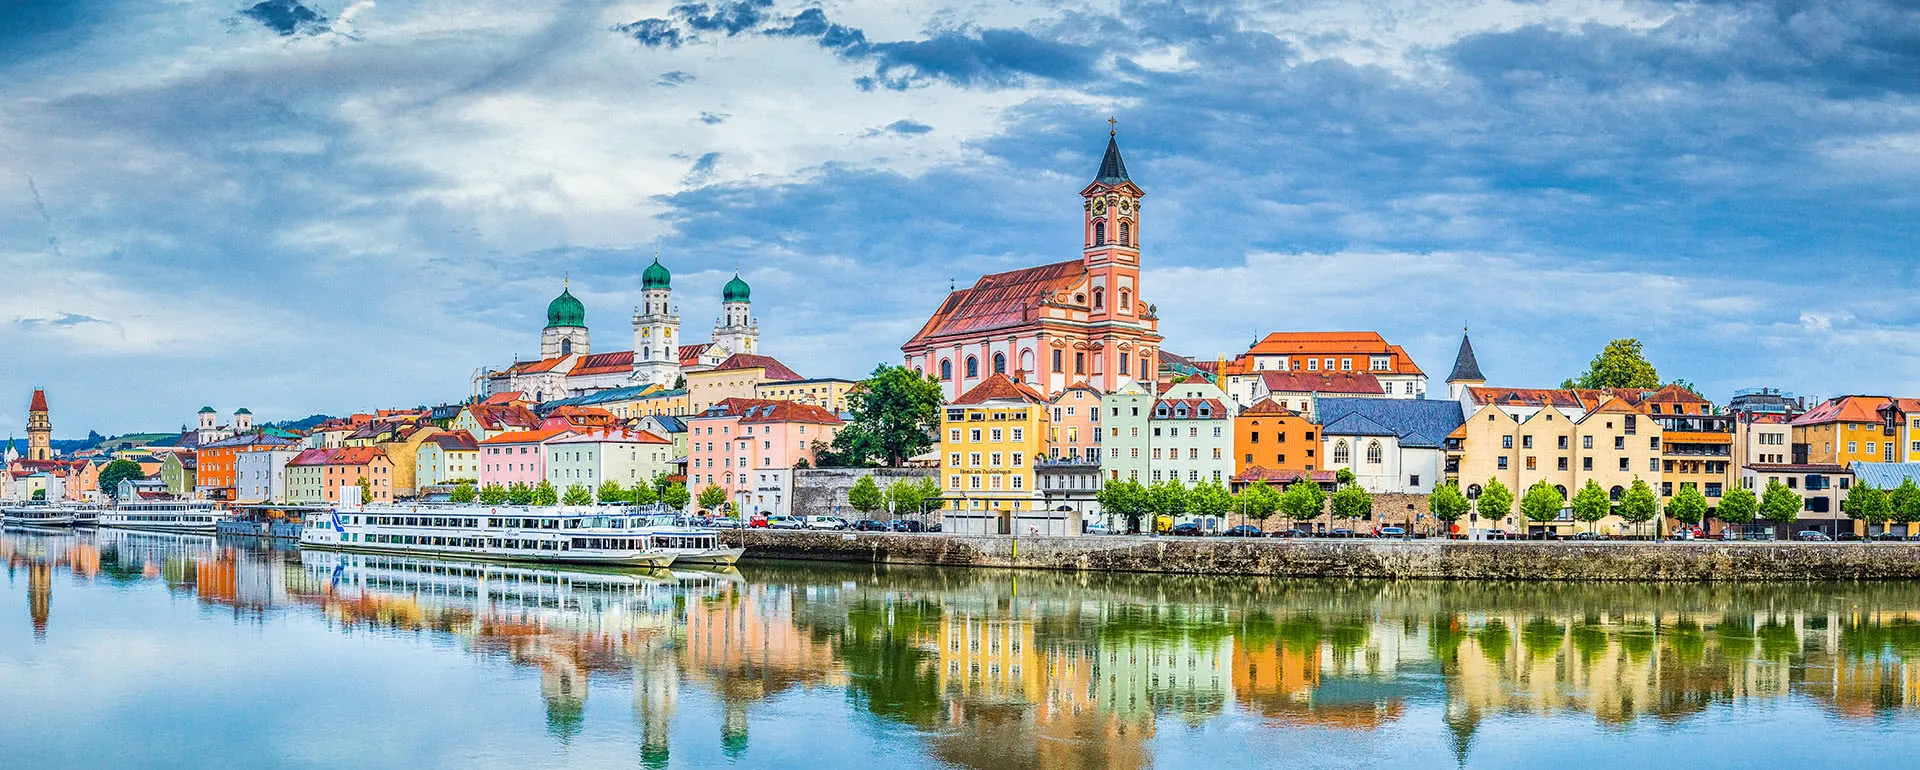 Passau - the destination for business travel